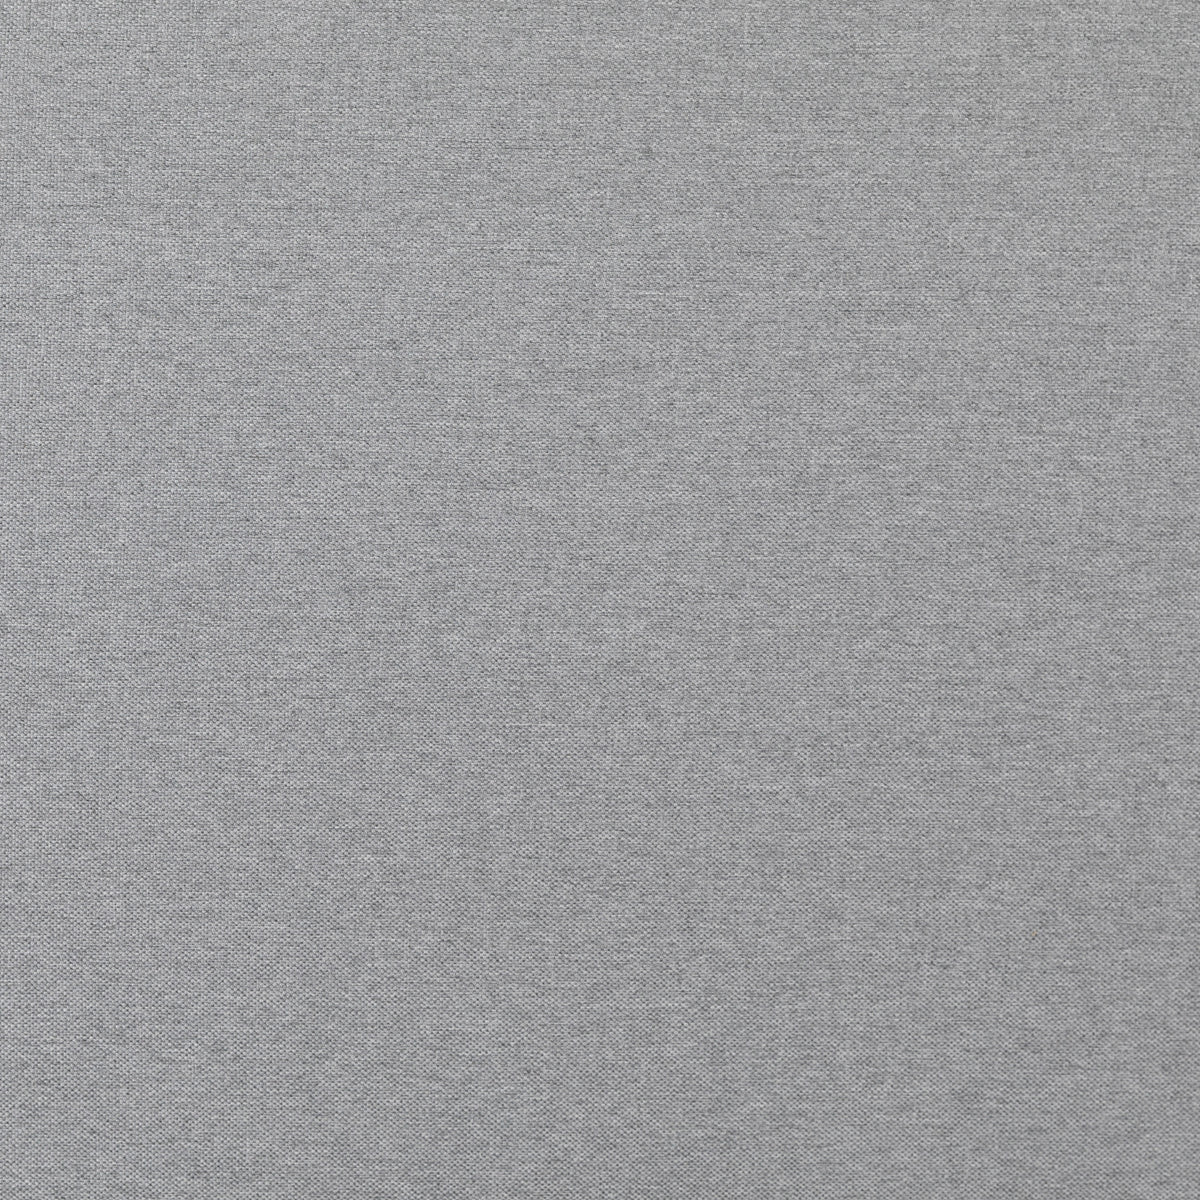 Light Gray,King |#| King Size Upholstered Metal Panel Headboard in Light Gray Fabric